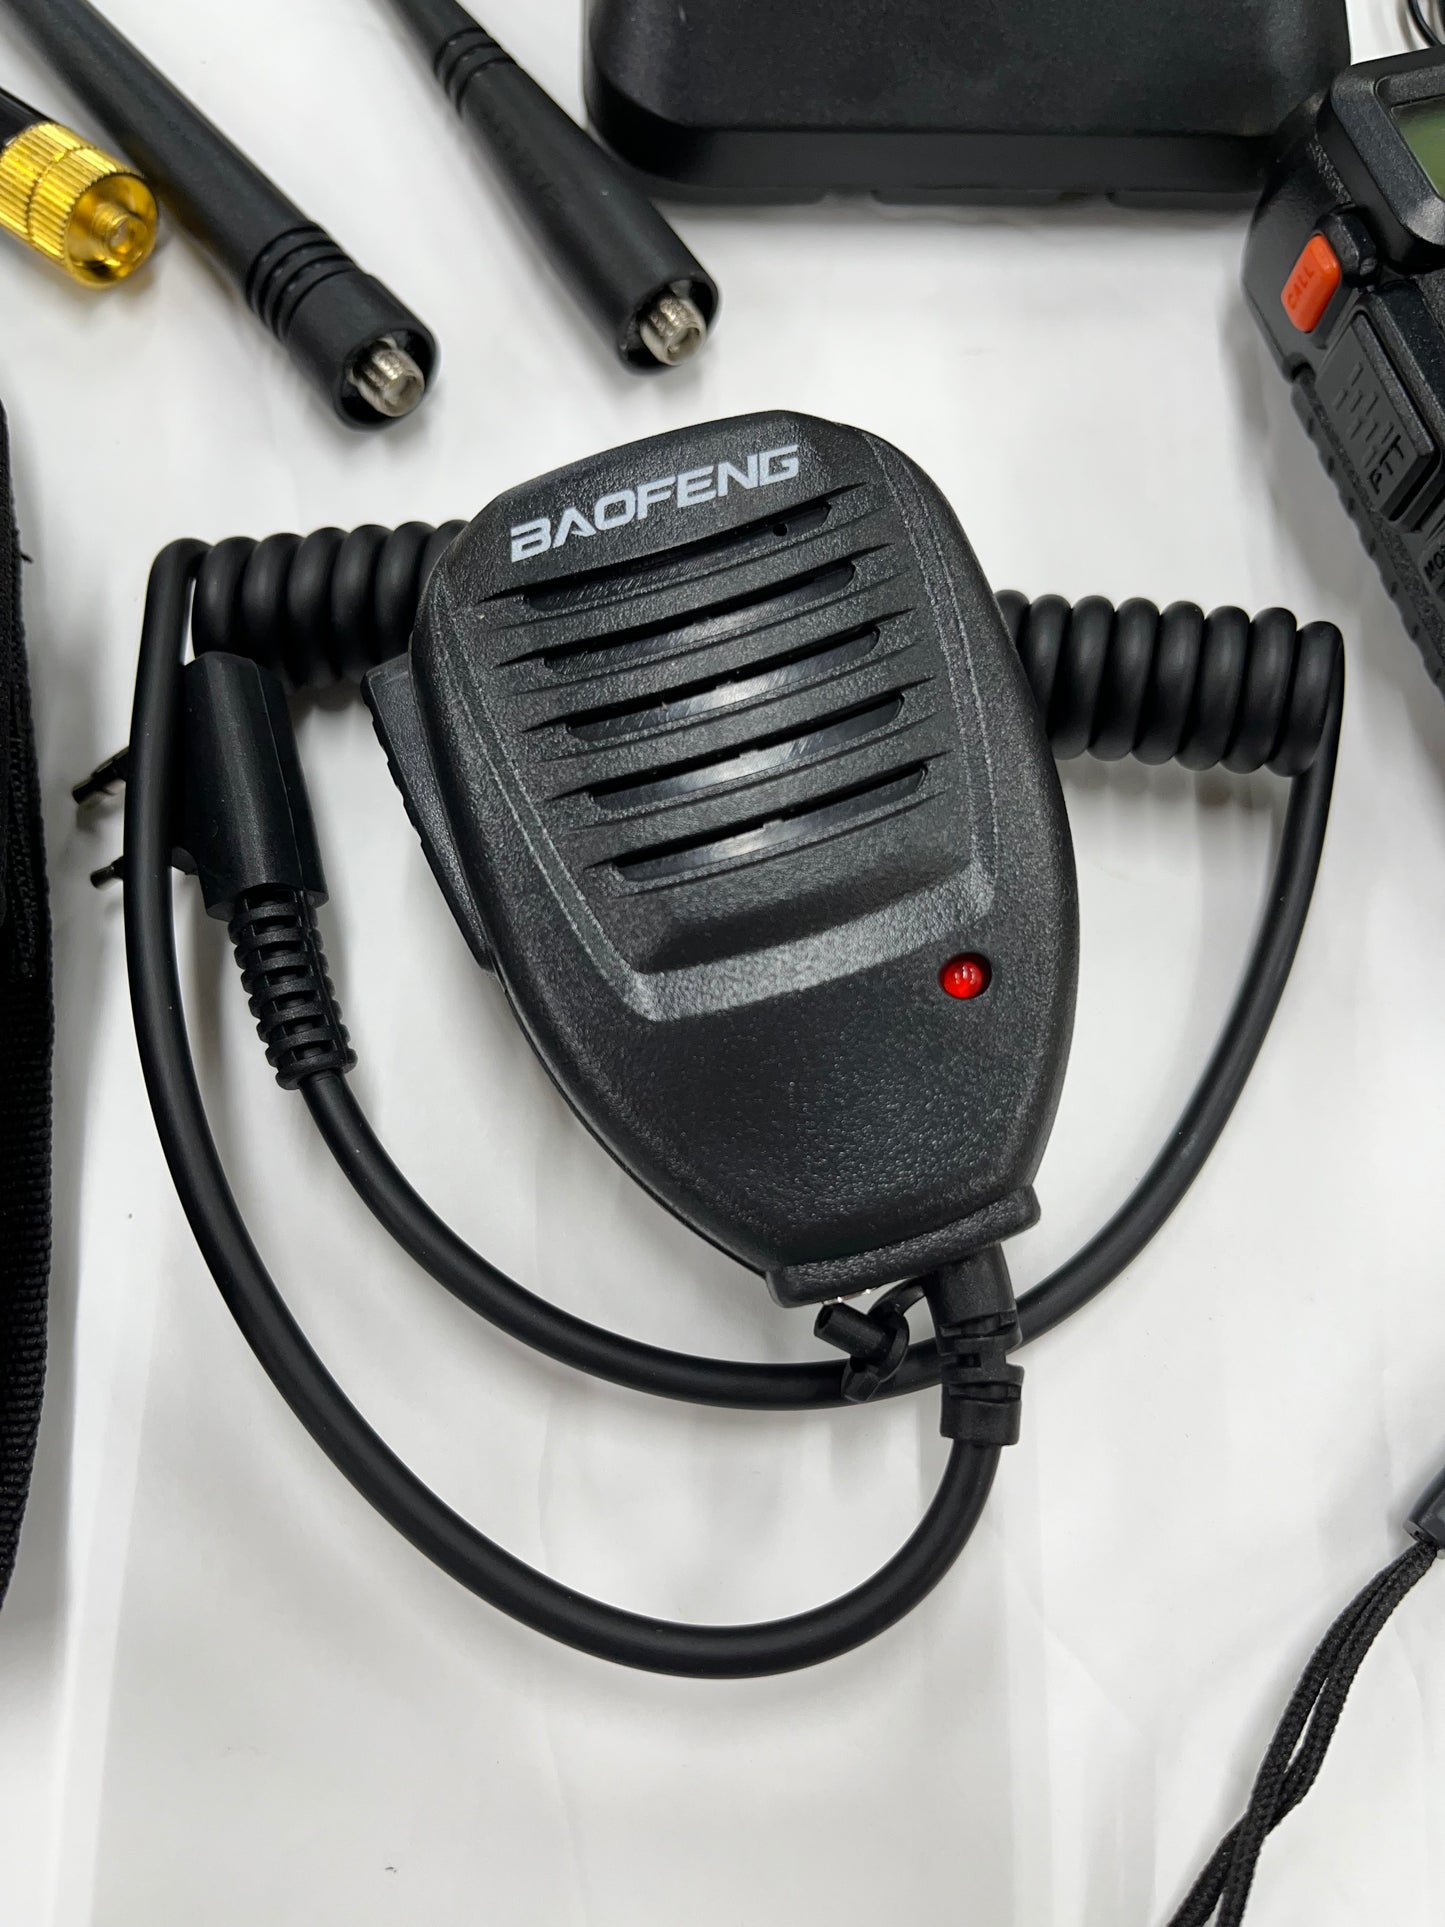 UHF-VHF HandHeld Baofeng Radio Package SPECIAL BUY UV-5R